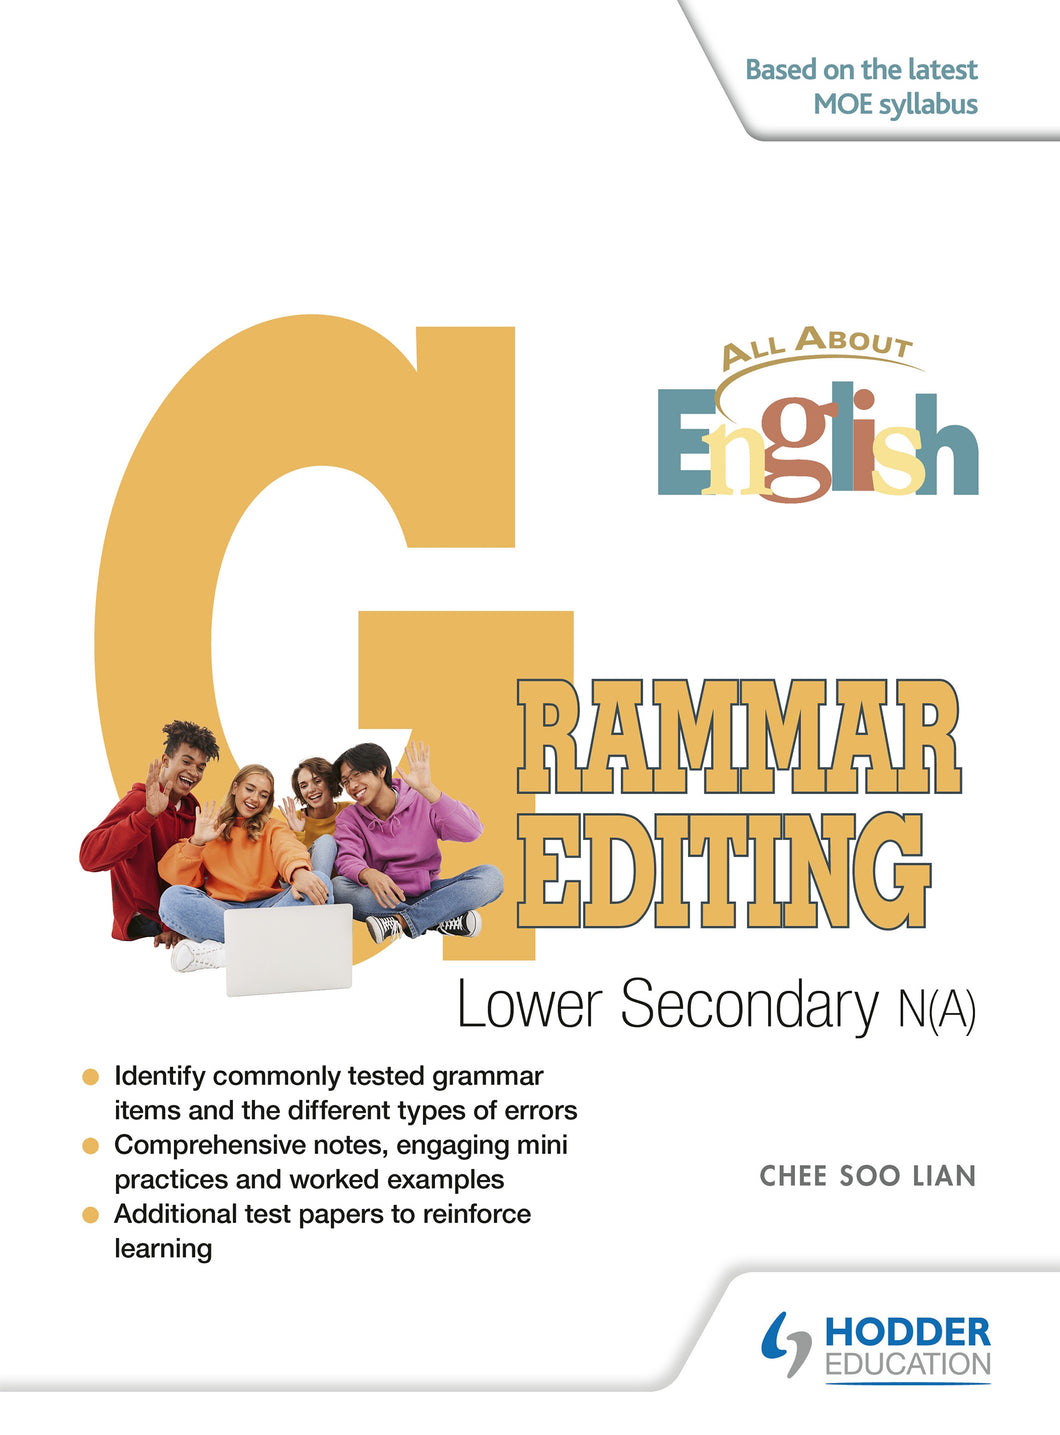 KRSS - English - All About English Grammar Editing (Lower Sec) Sec 2 (NA)